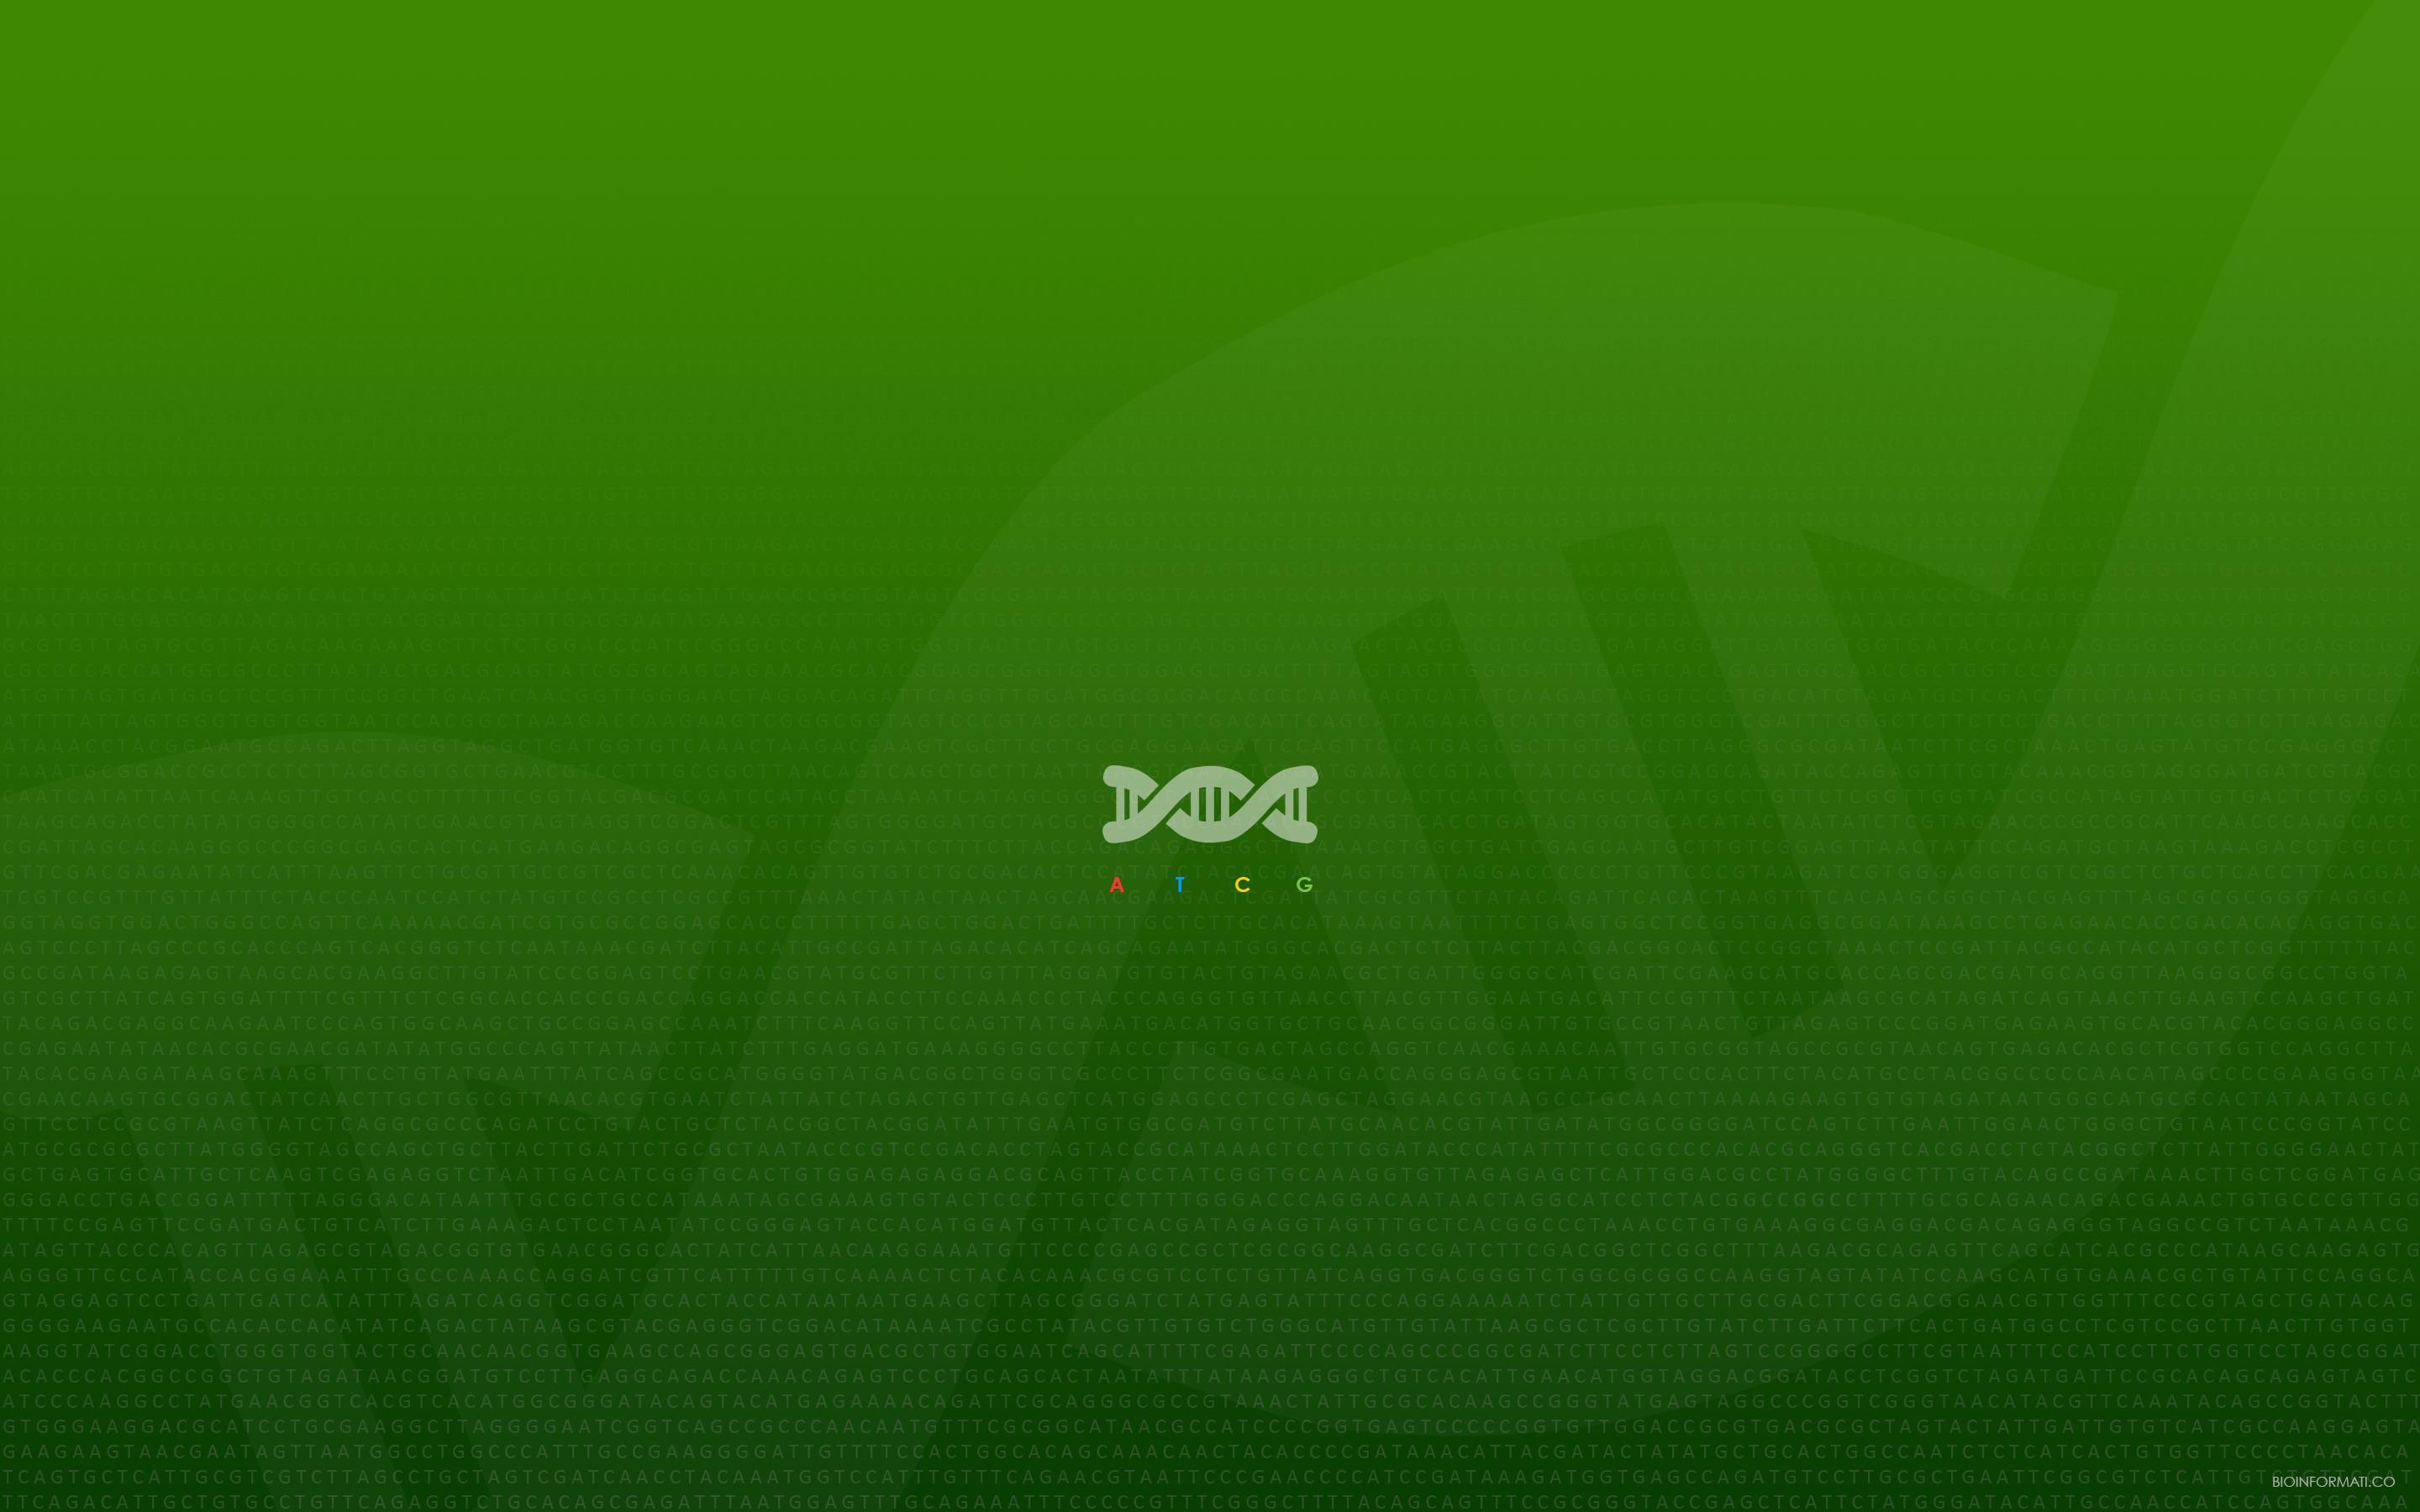 New DNA themed wallpaper (retina display ready 2880×1800). My